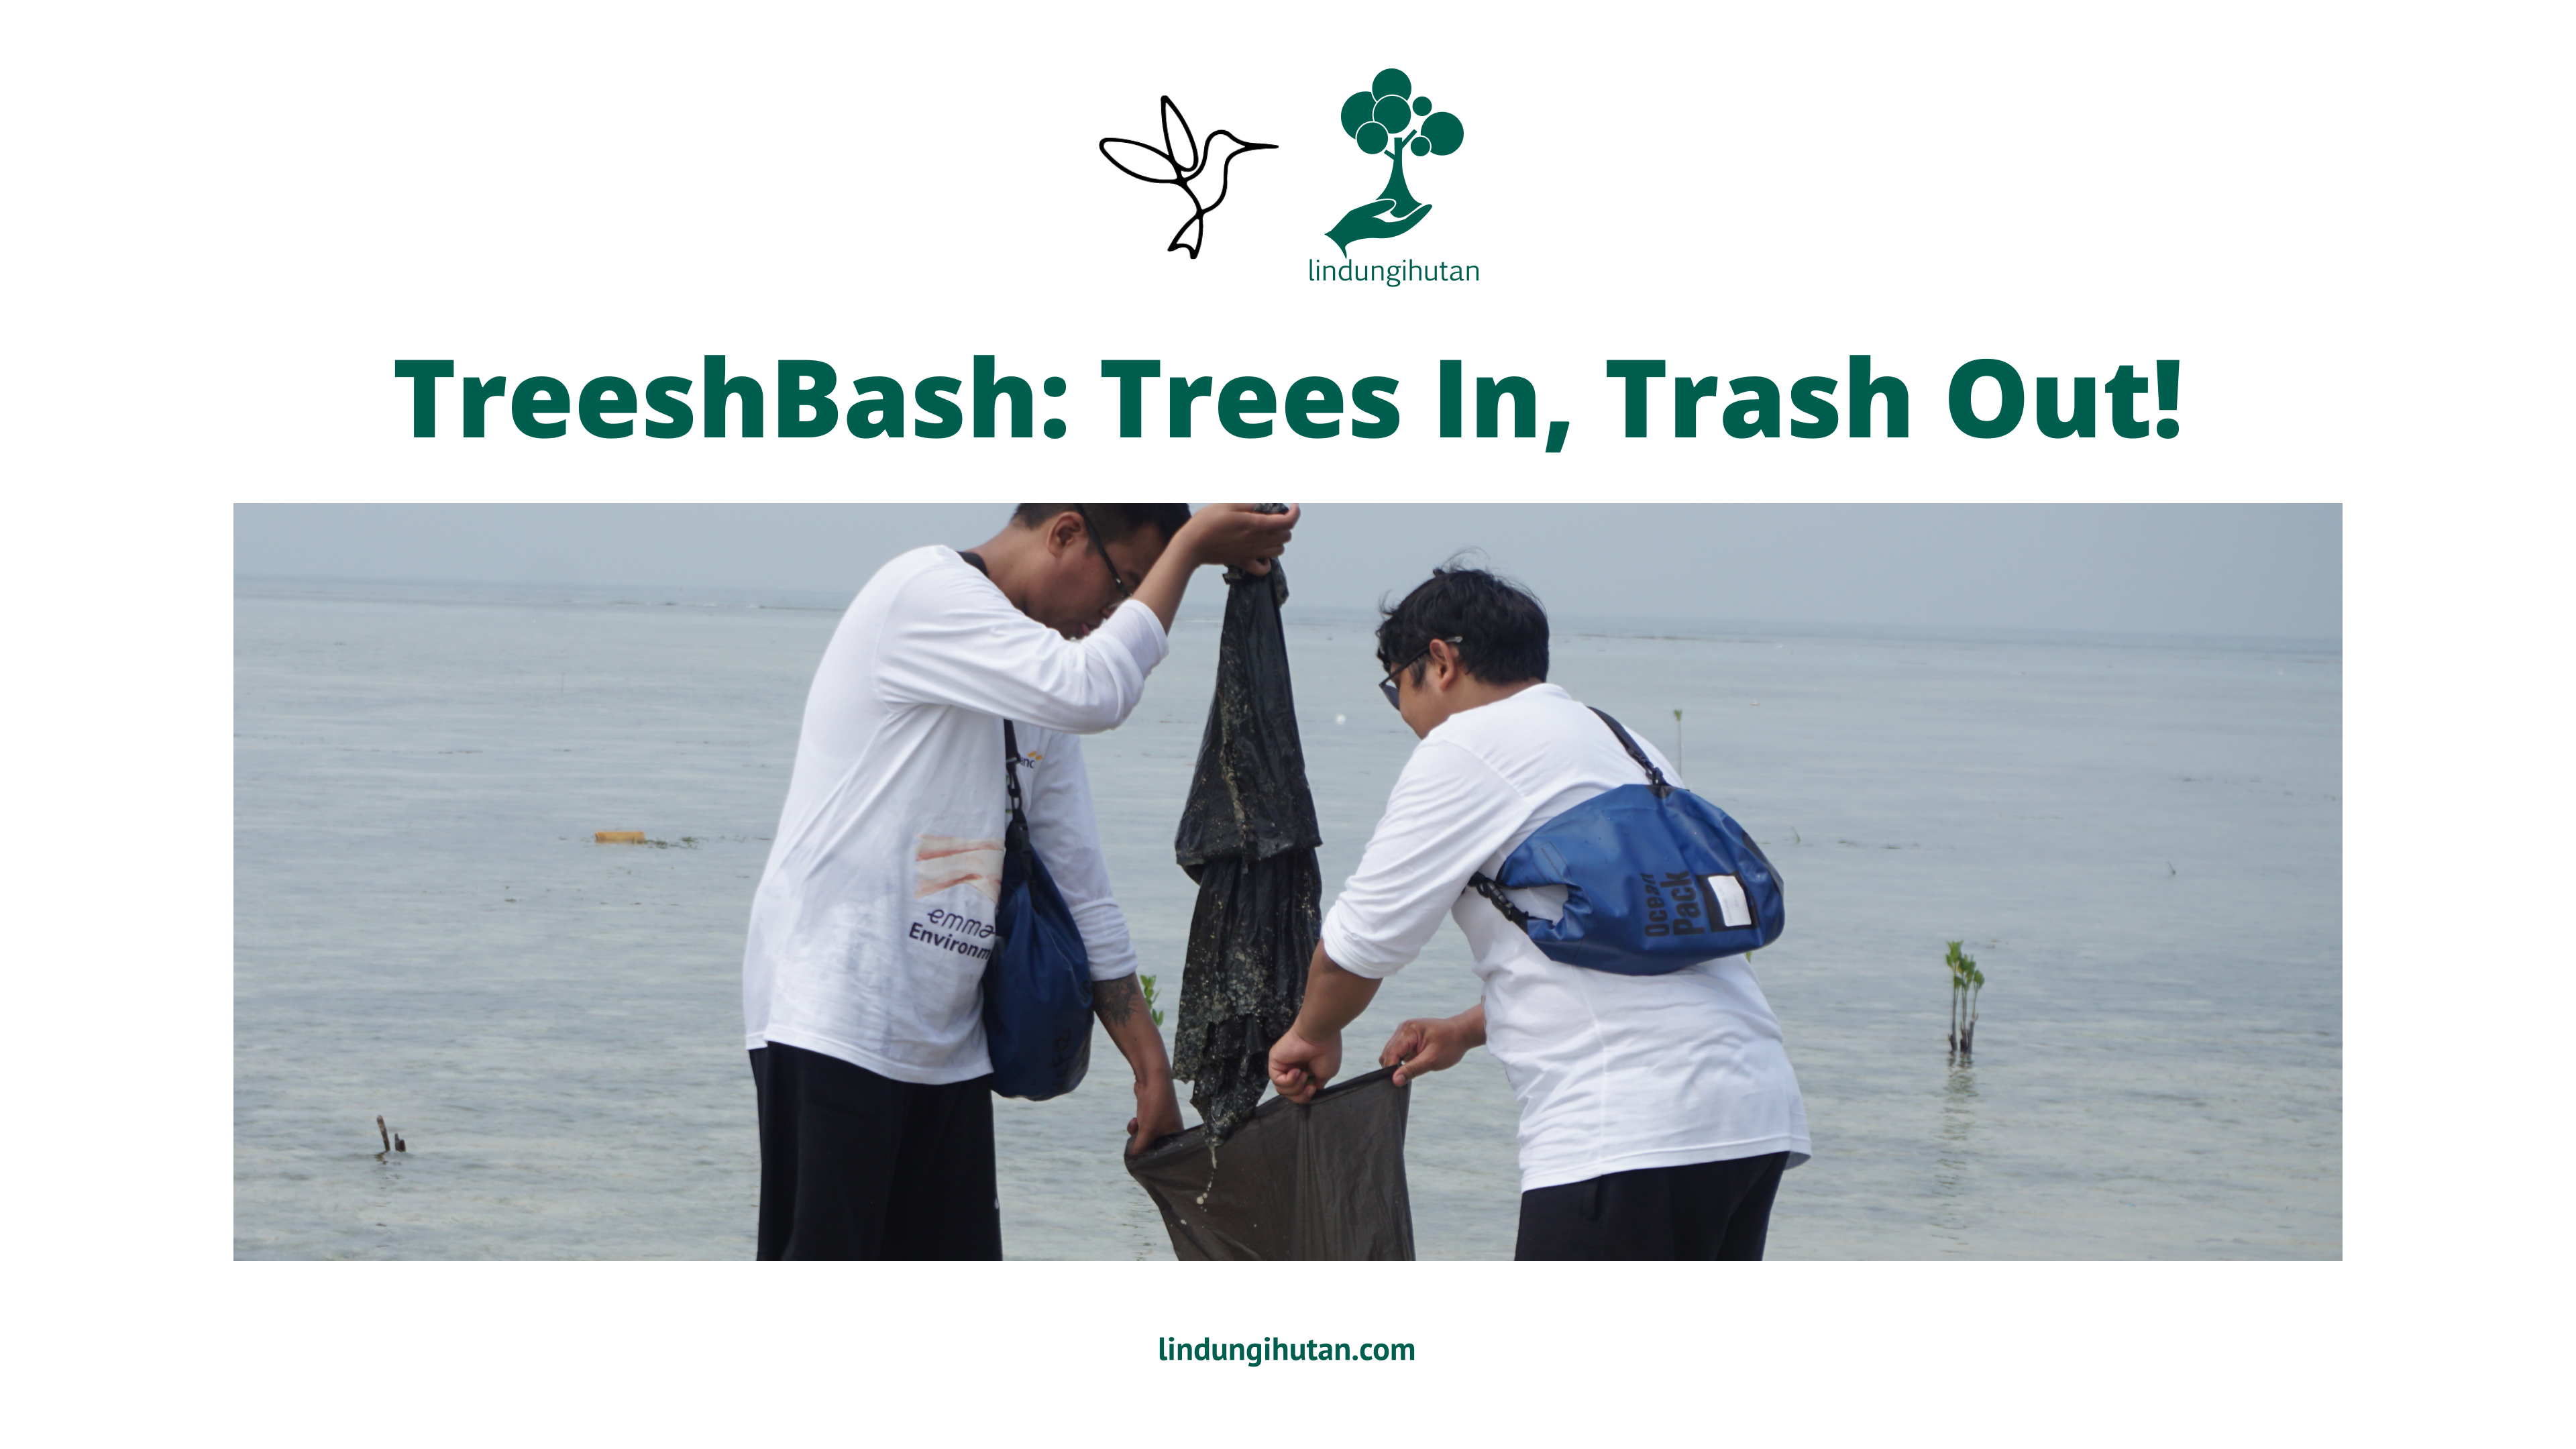 TreeshBash: Kolaborasi Terbaik untuk Mewujudkan Lingkungan yang Berkelanjutan